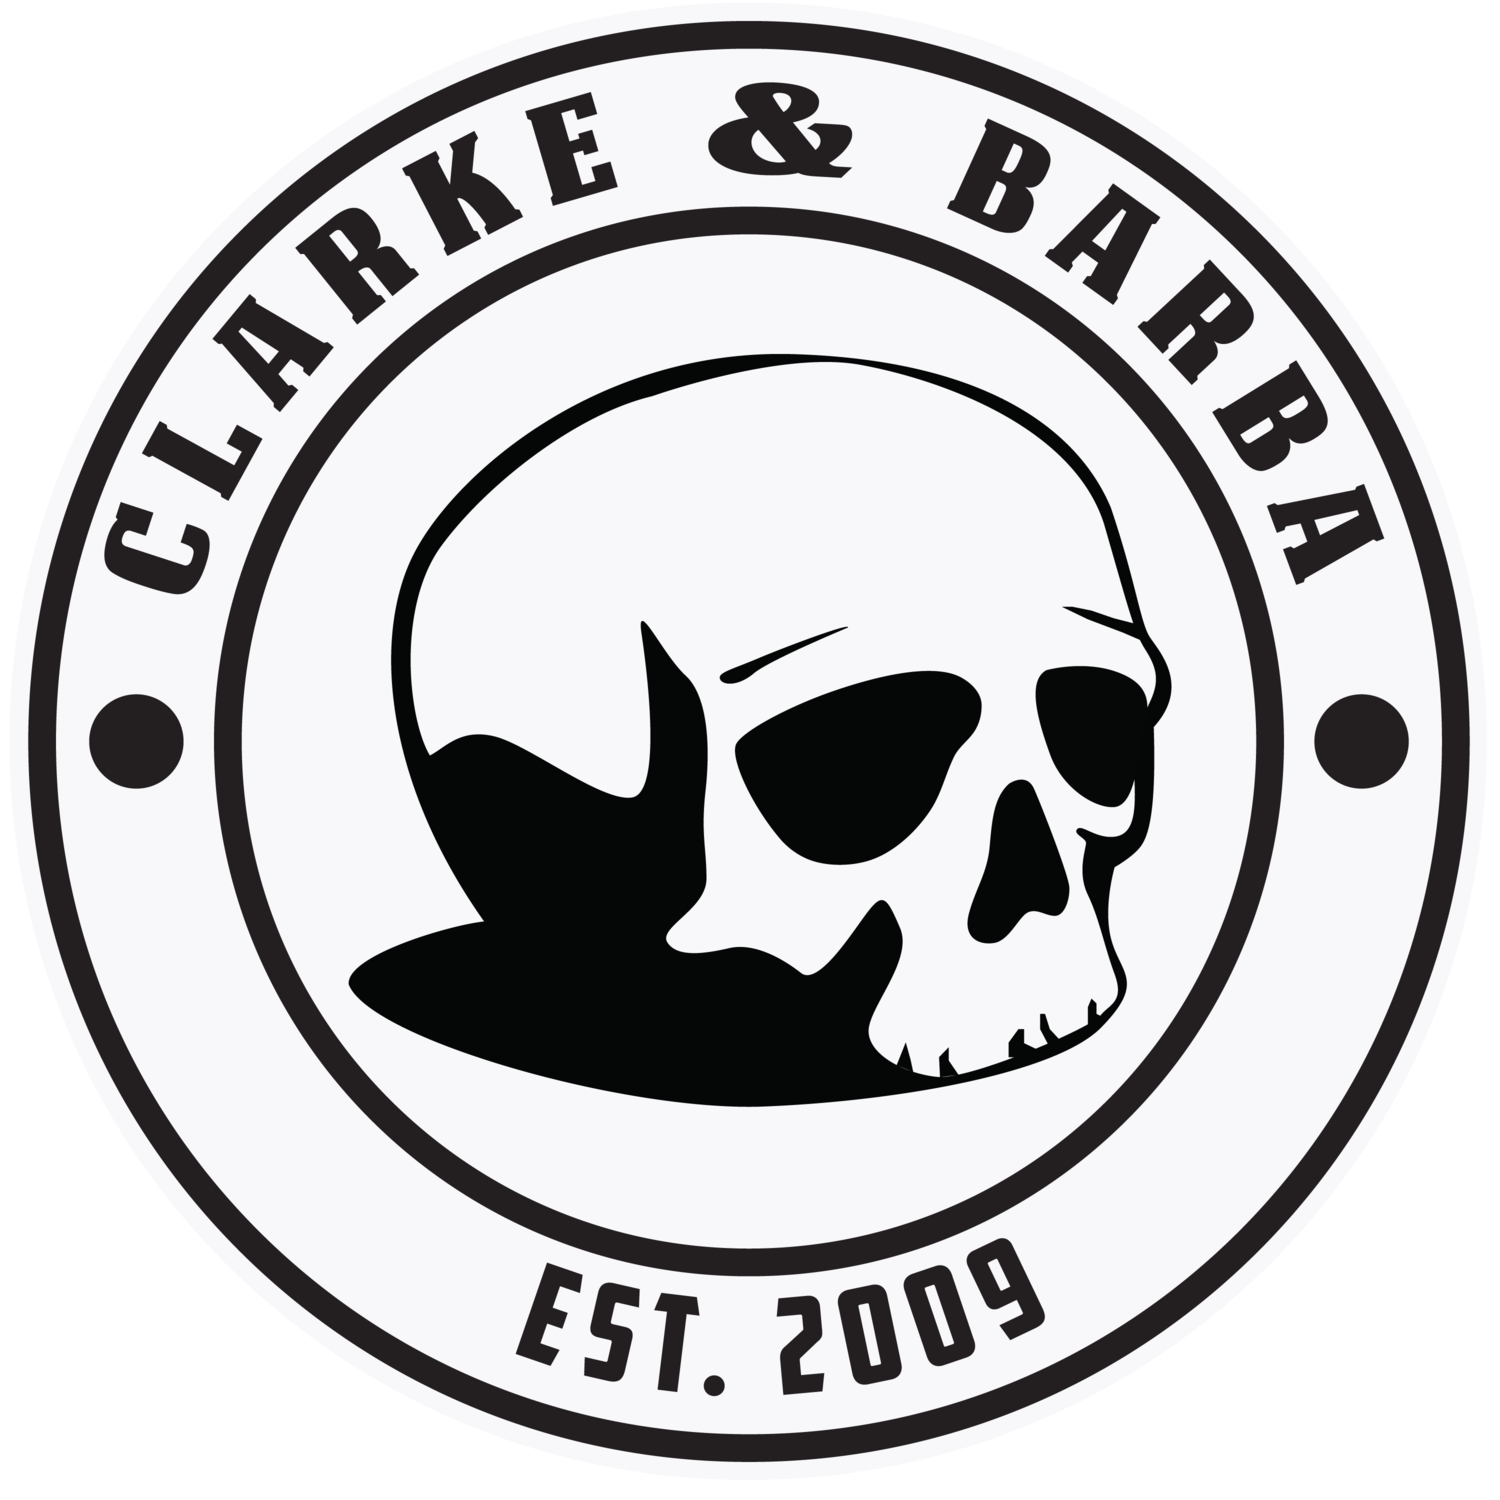 Clarke & Barba